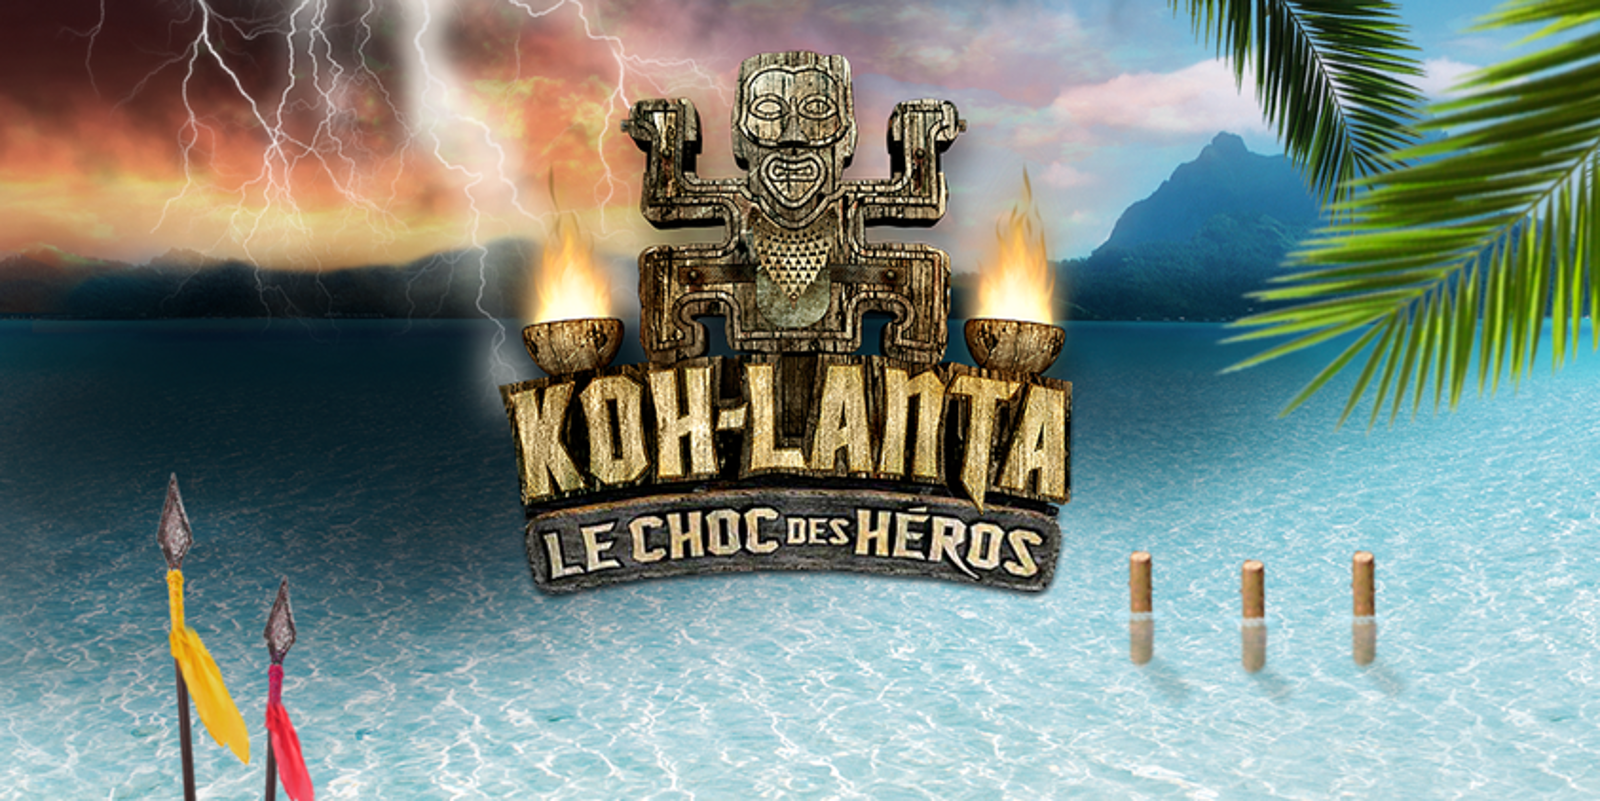 Koh-Lanta - Le Choc des Héros